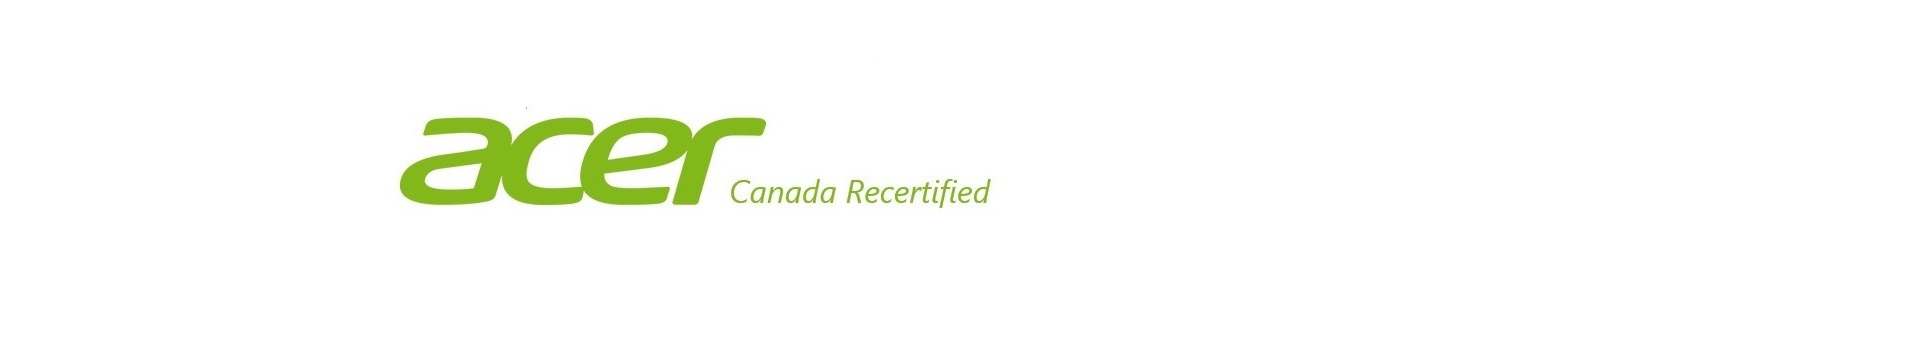 Acer Canada Recertified